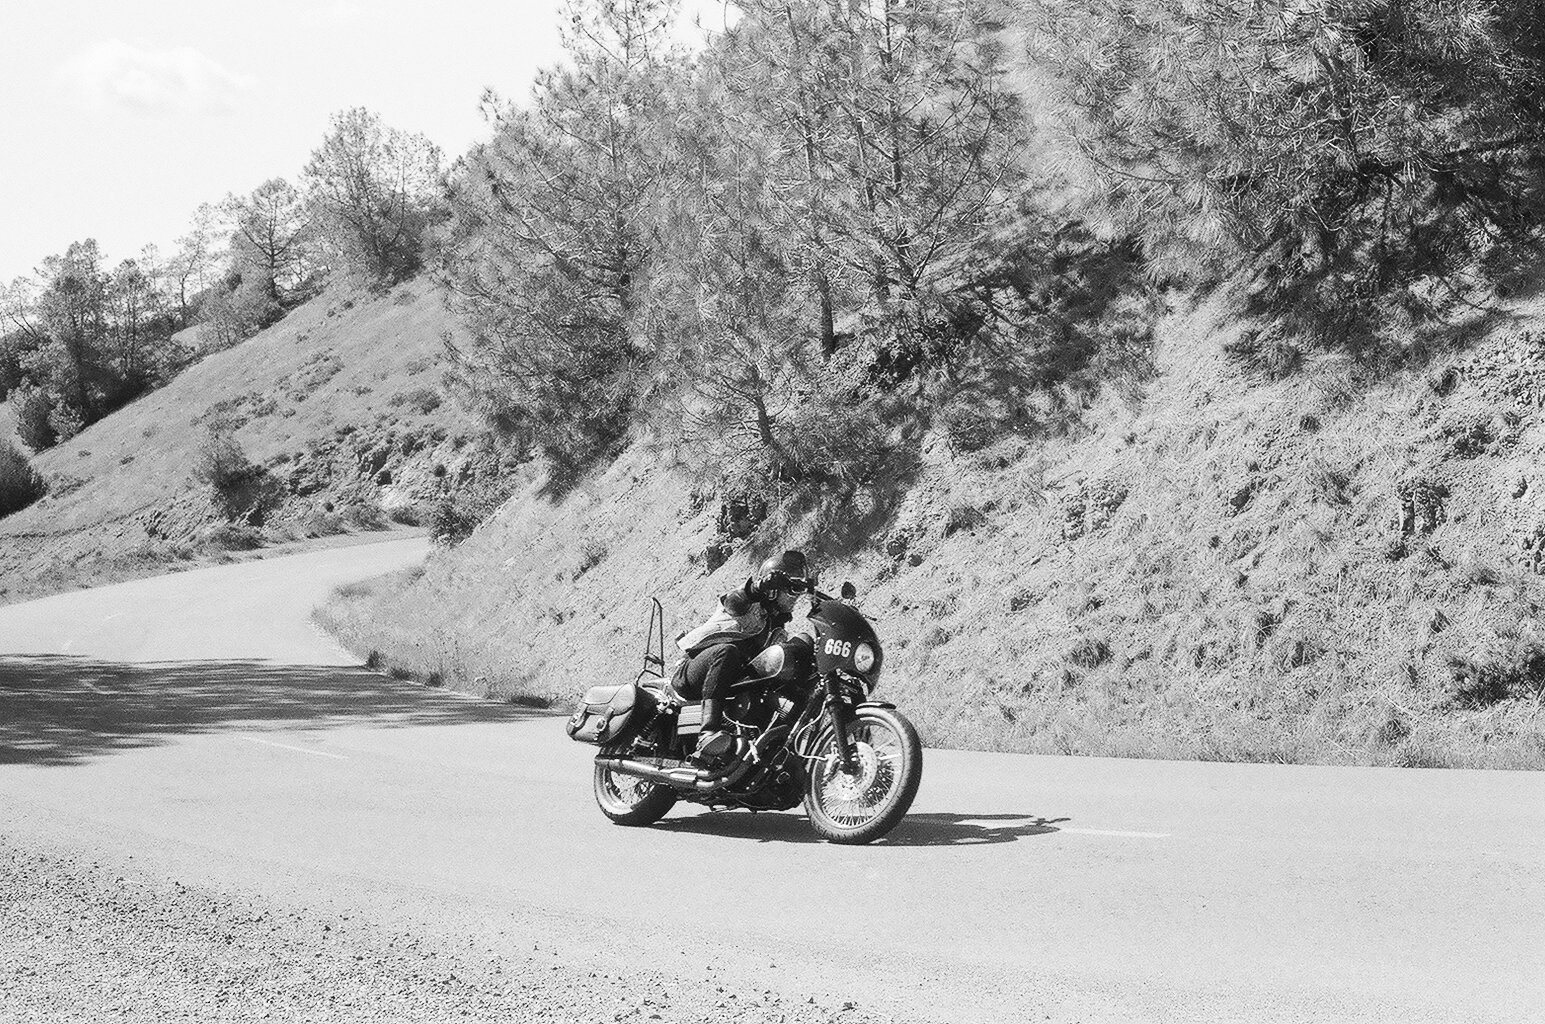 Corey Duffel Riding at Mt. Diablo - Photo by Tim Cisilino